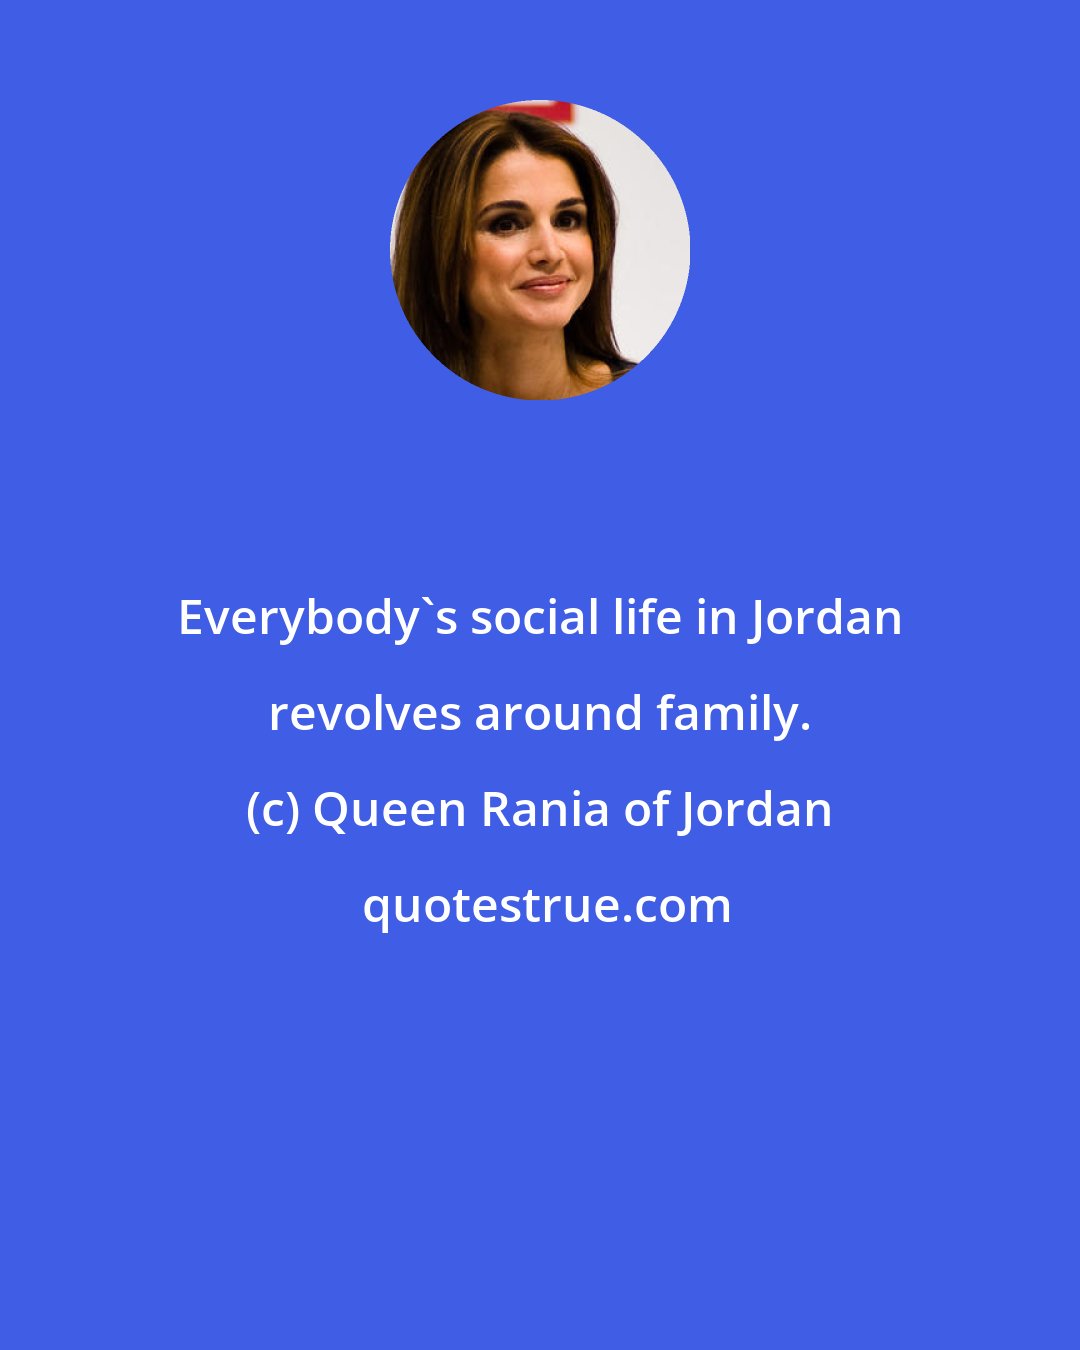 Queen Rania of Jordan: Everybody's social life in Jordan revolves around family.